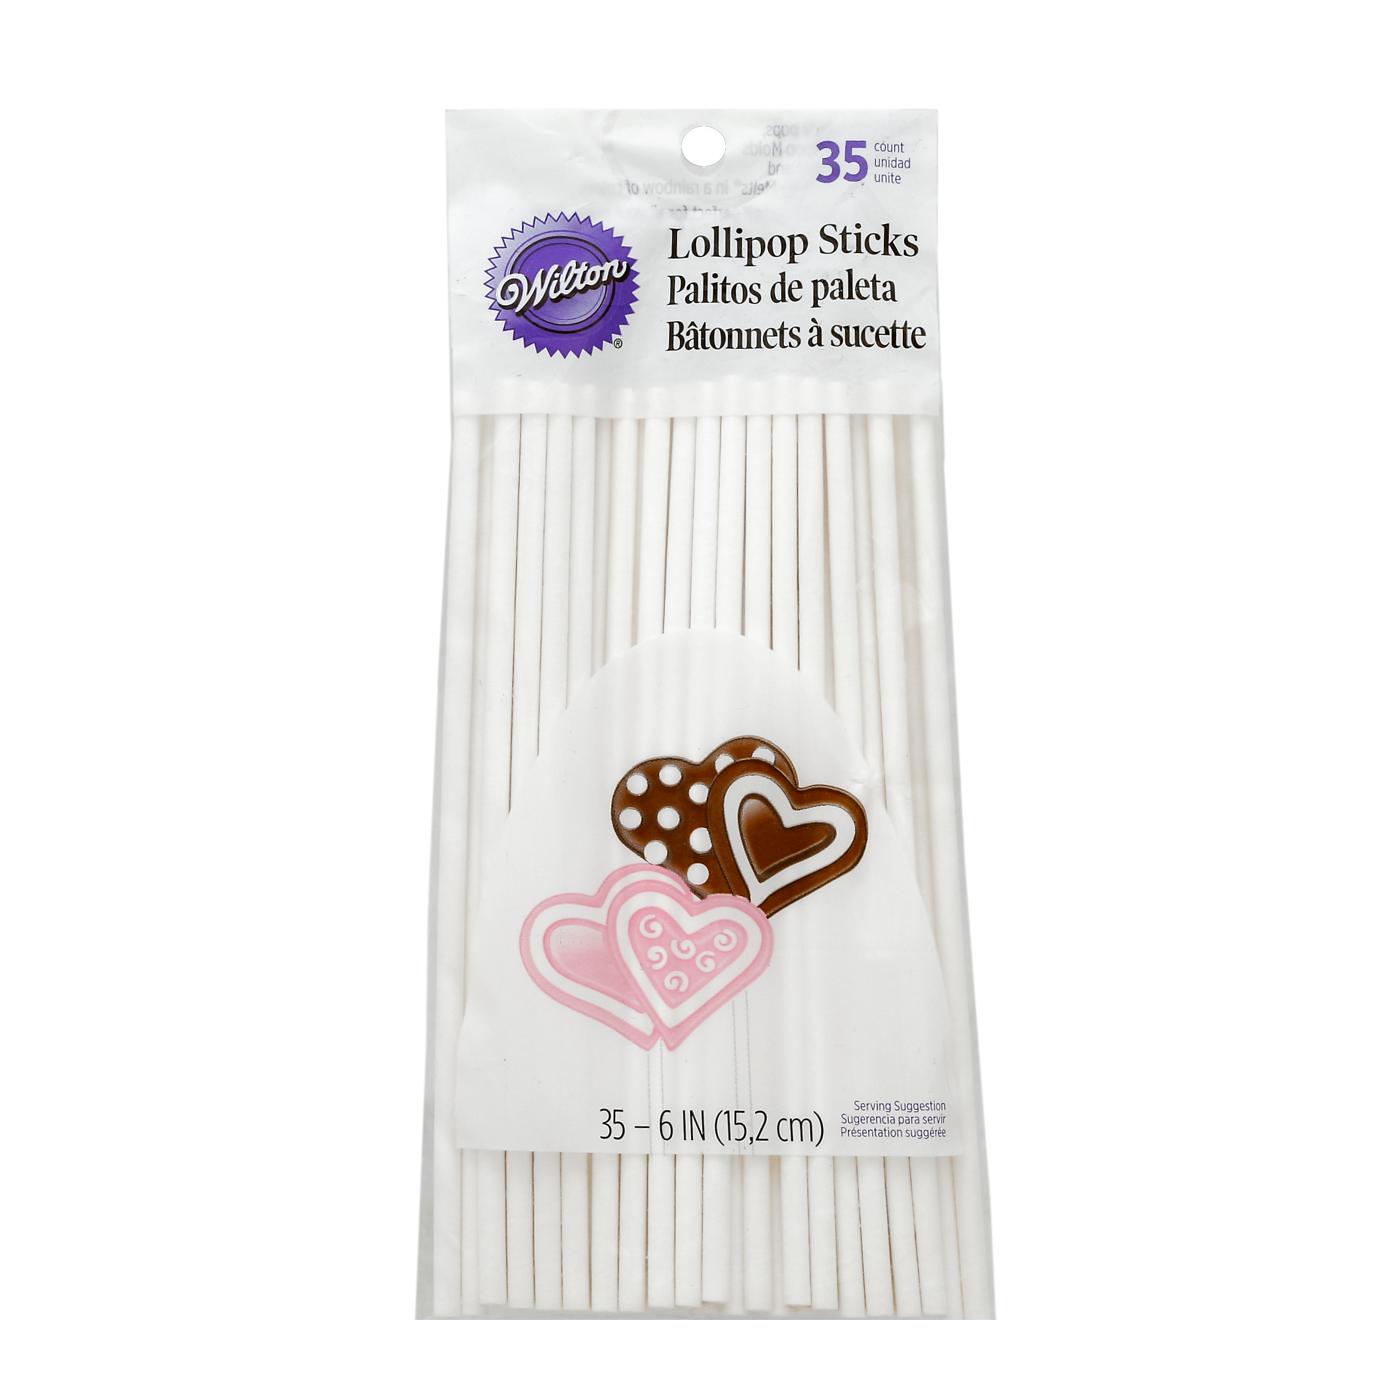 Wilton White 6-Inch Lollipop Sticks - Shop Icing & Decorations at